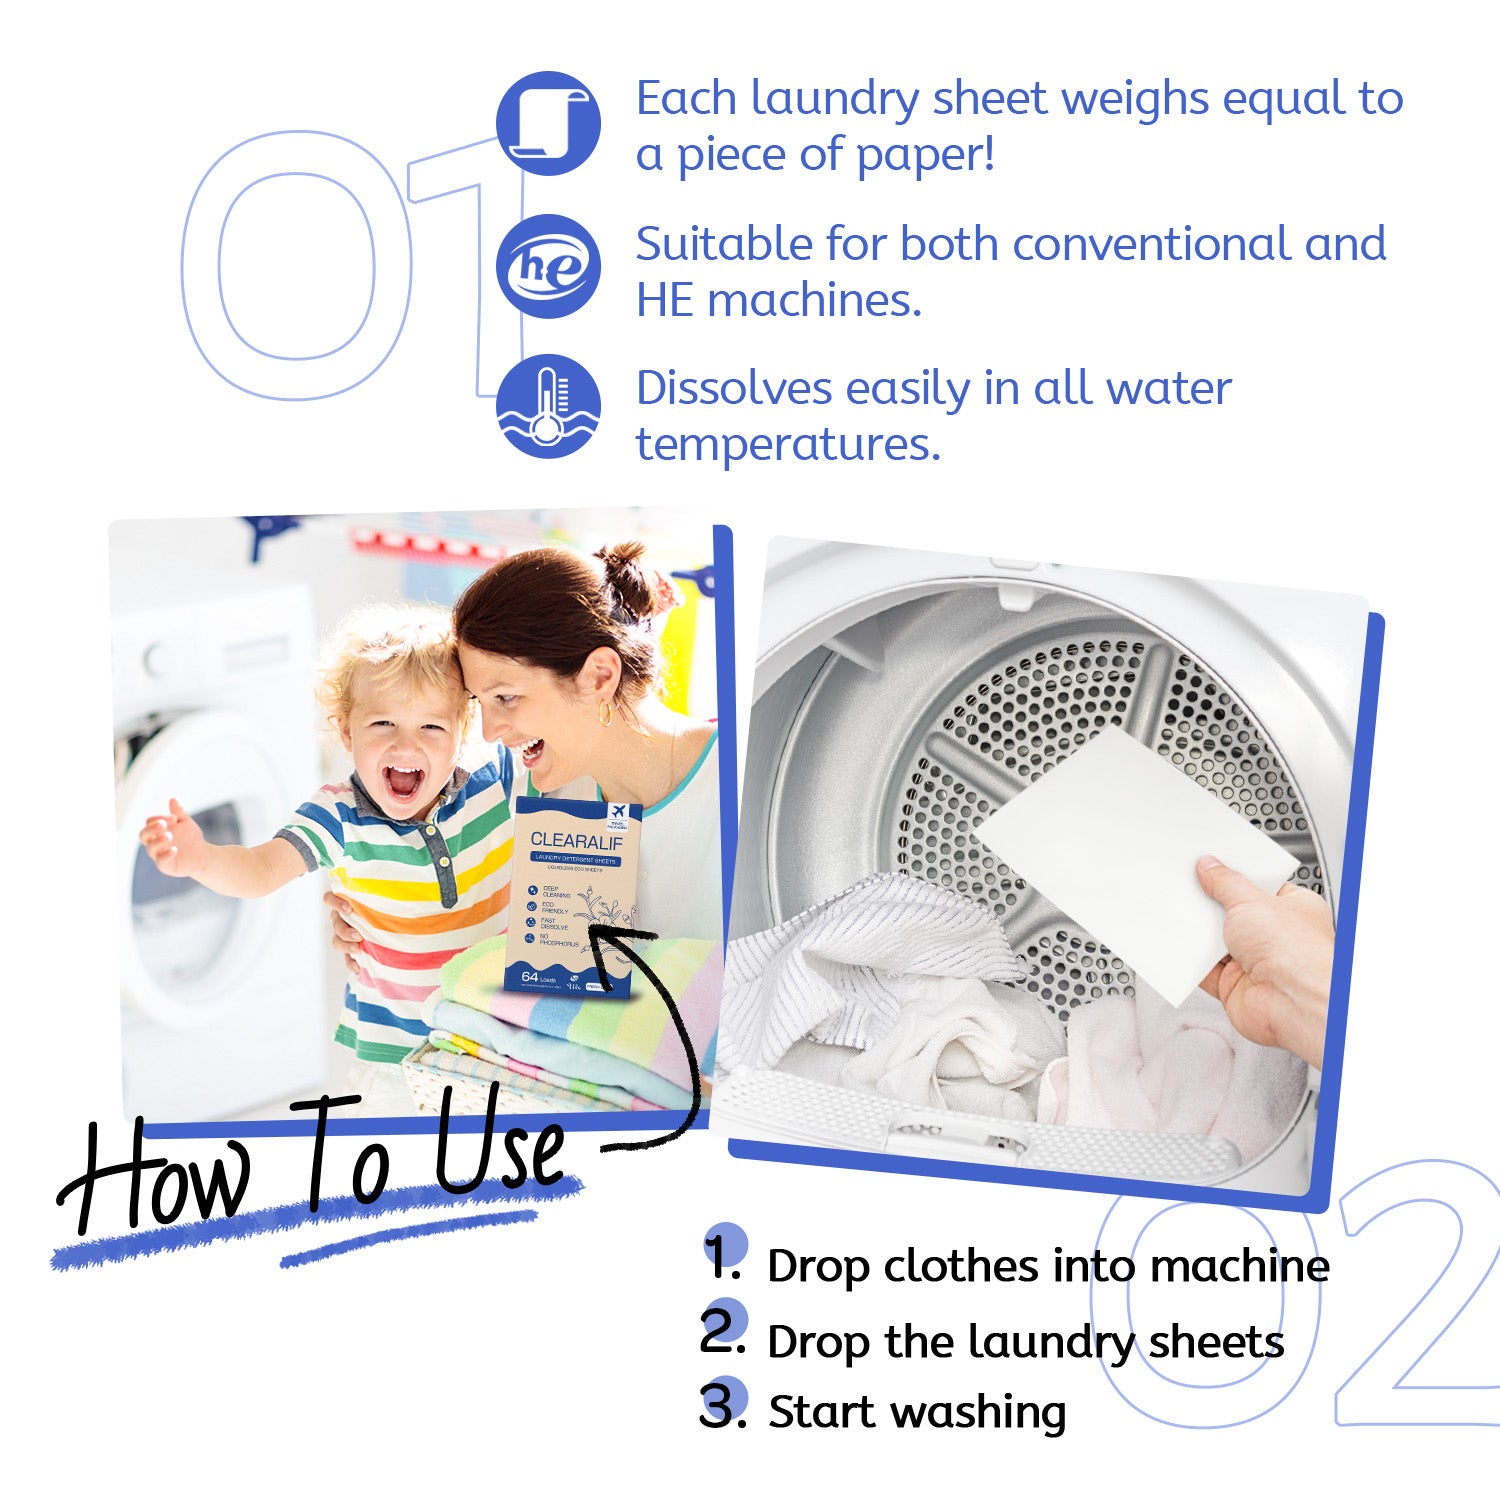 CLEARALIF Eco Friendly & Hypoallergenic Laundry Detergent 64 Loads, Fresh Liene